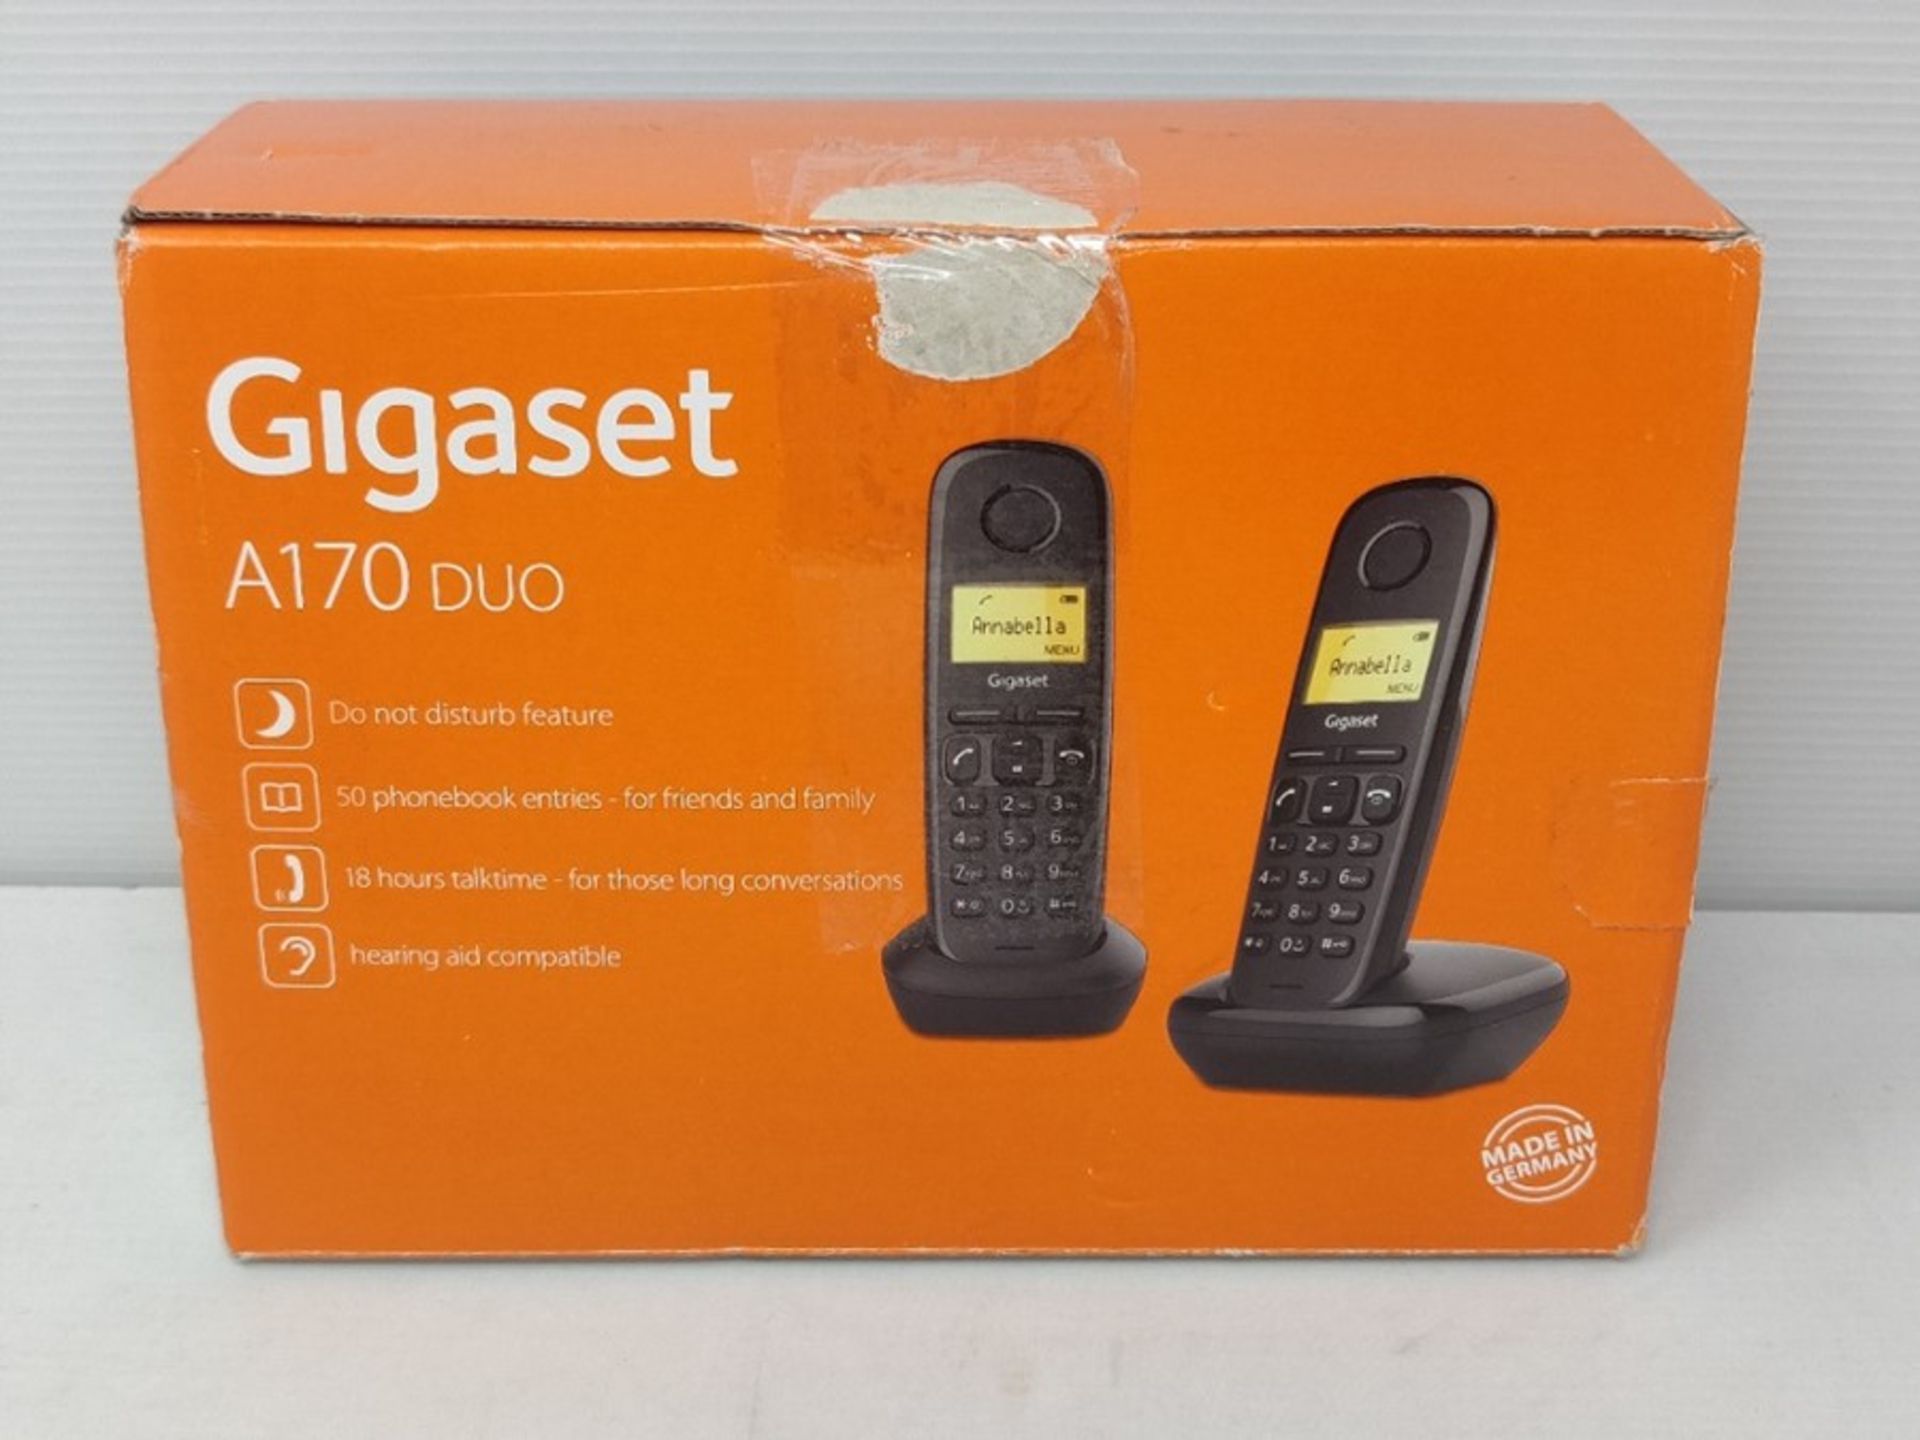 Gigaset A170 DUO - Basic Cordless Home Phone with Big Display and Energy-Saving ECO DE - Image 2 of 3